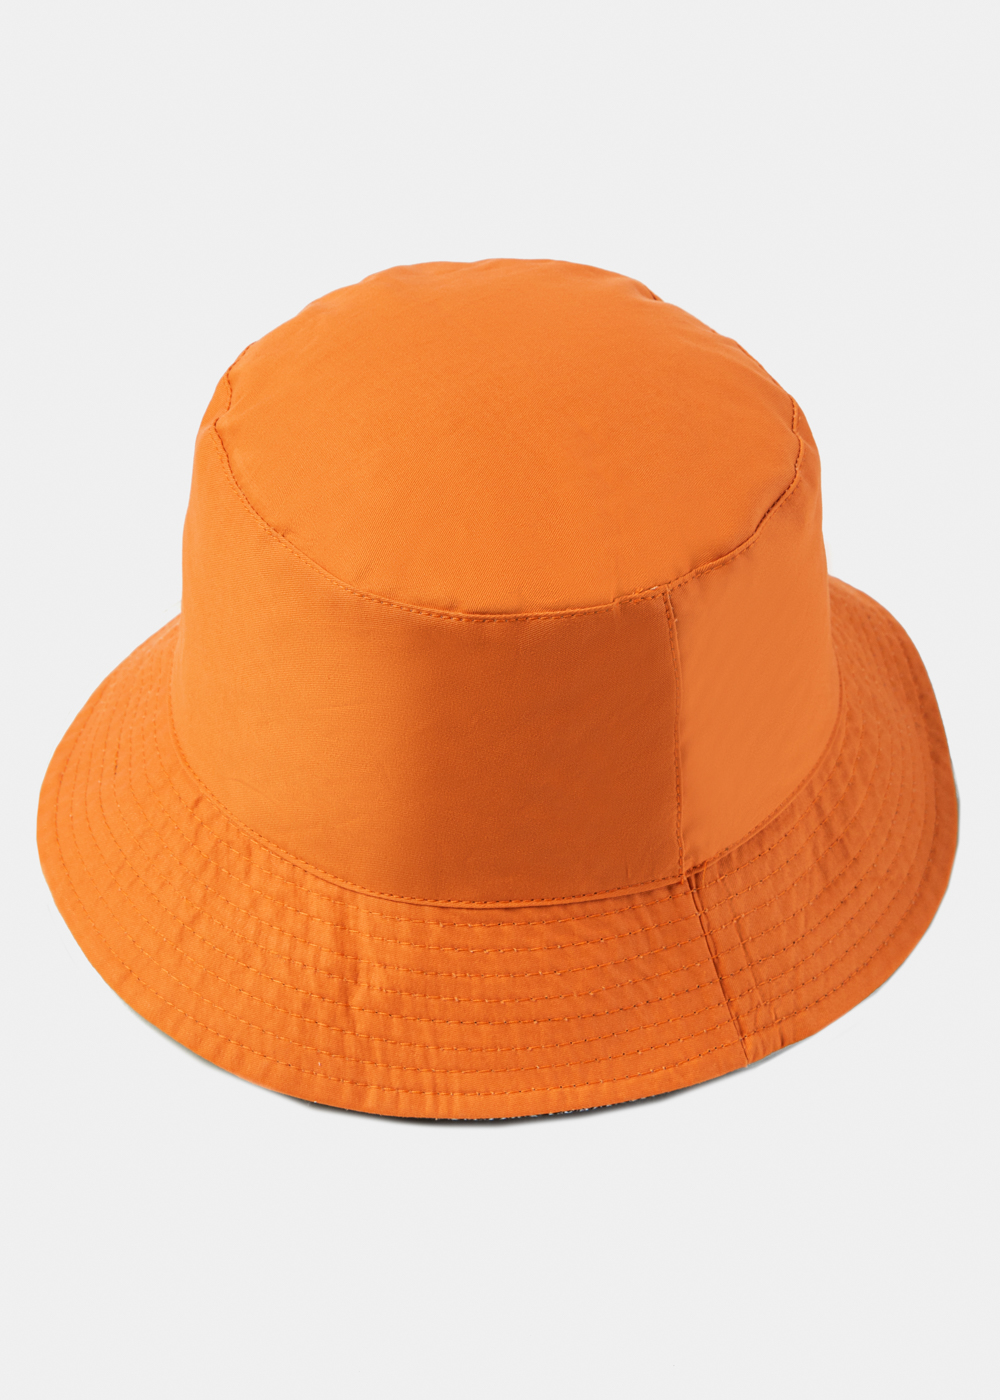 Double-Faced Bucket Lahour Pattern & Light Orange